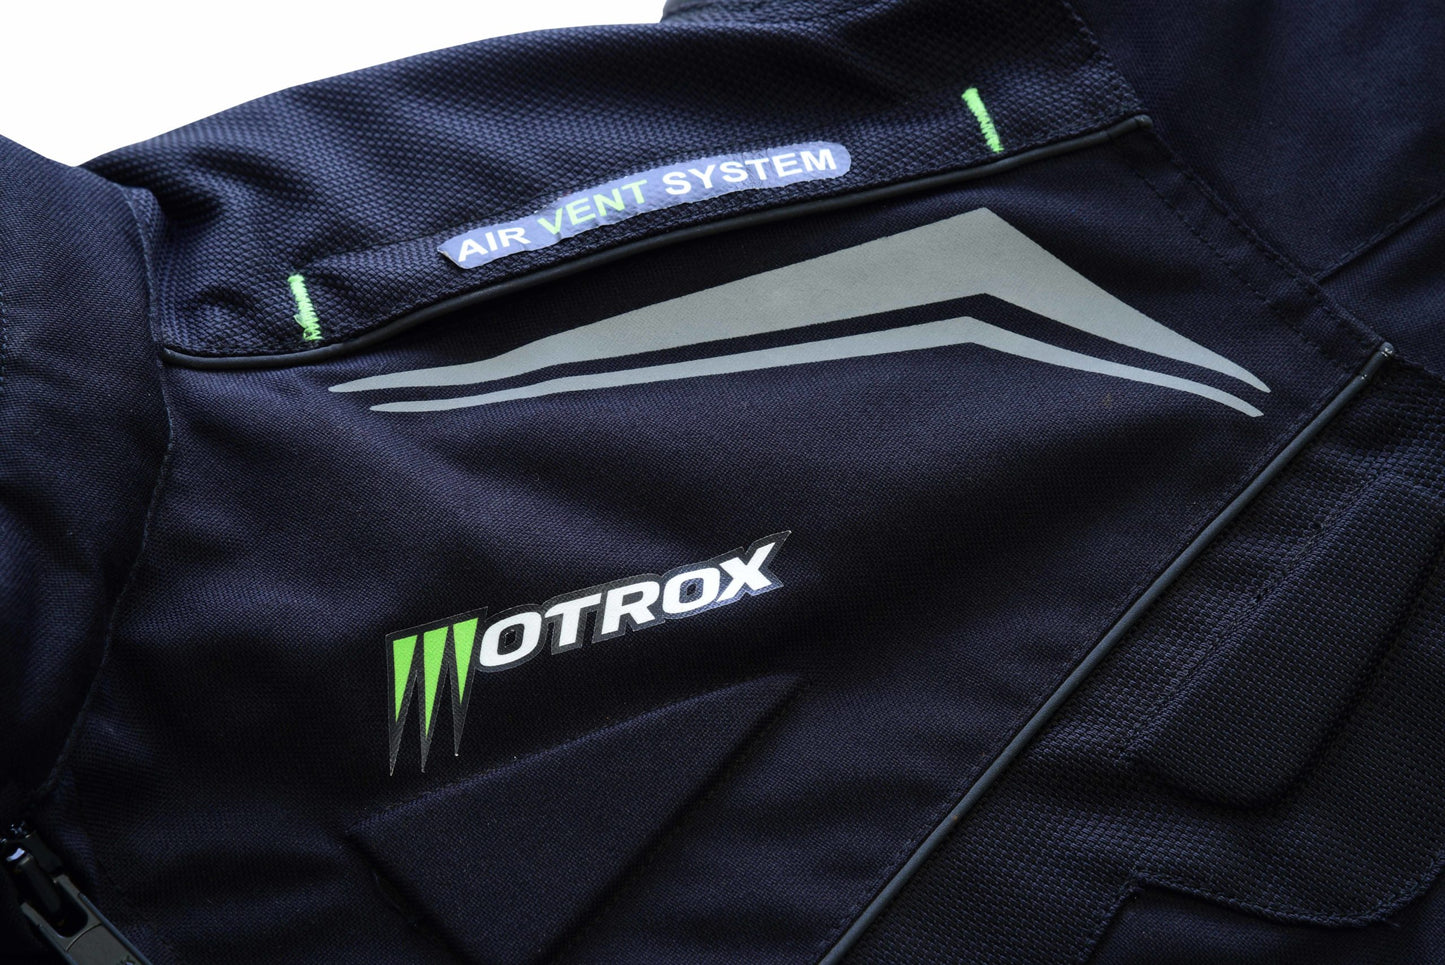 Textile Motorcycle Jacket Thrilling Pro-GTX Black 2